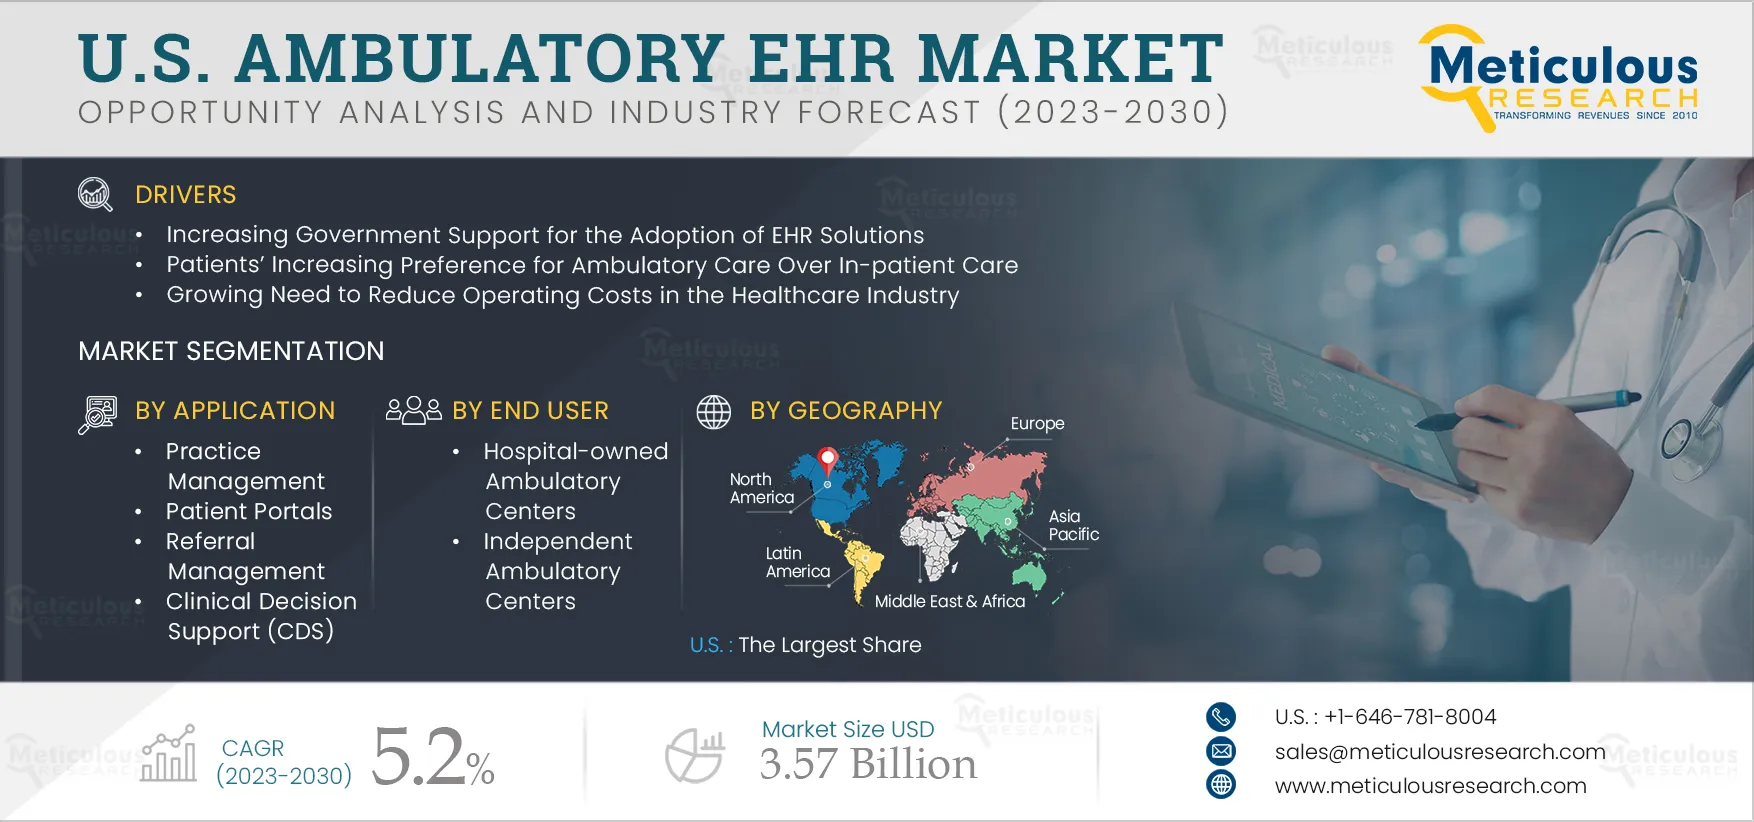 U.S. Ambulatory EHR Market